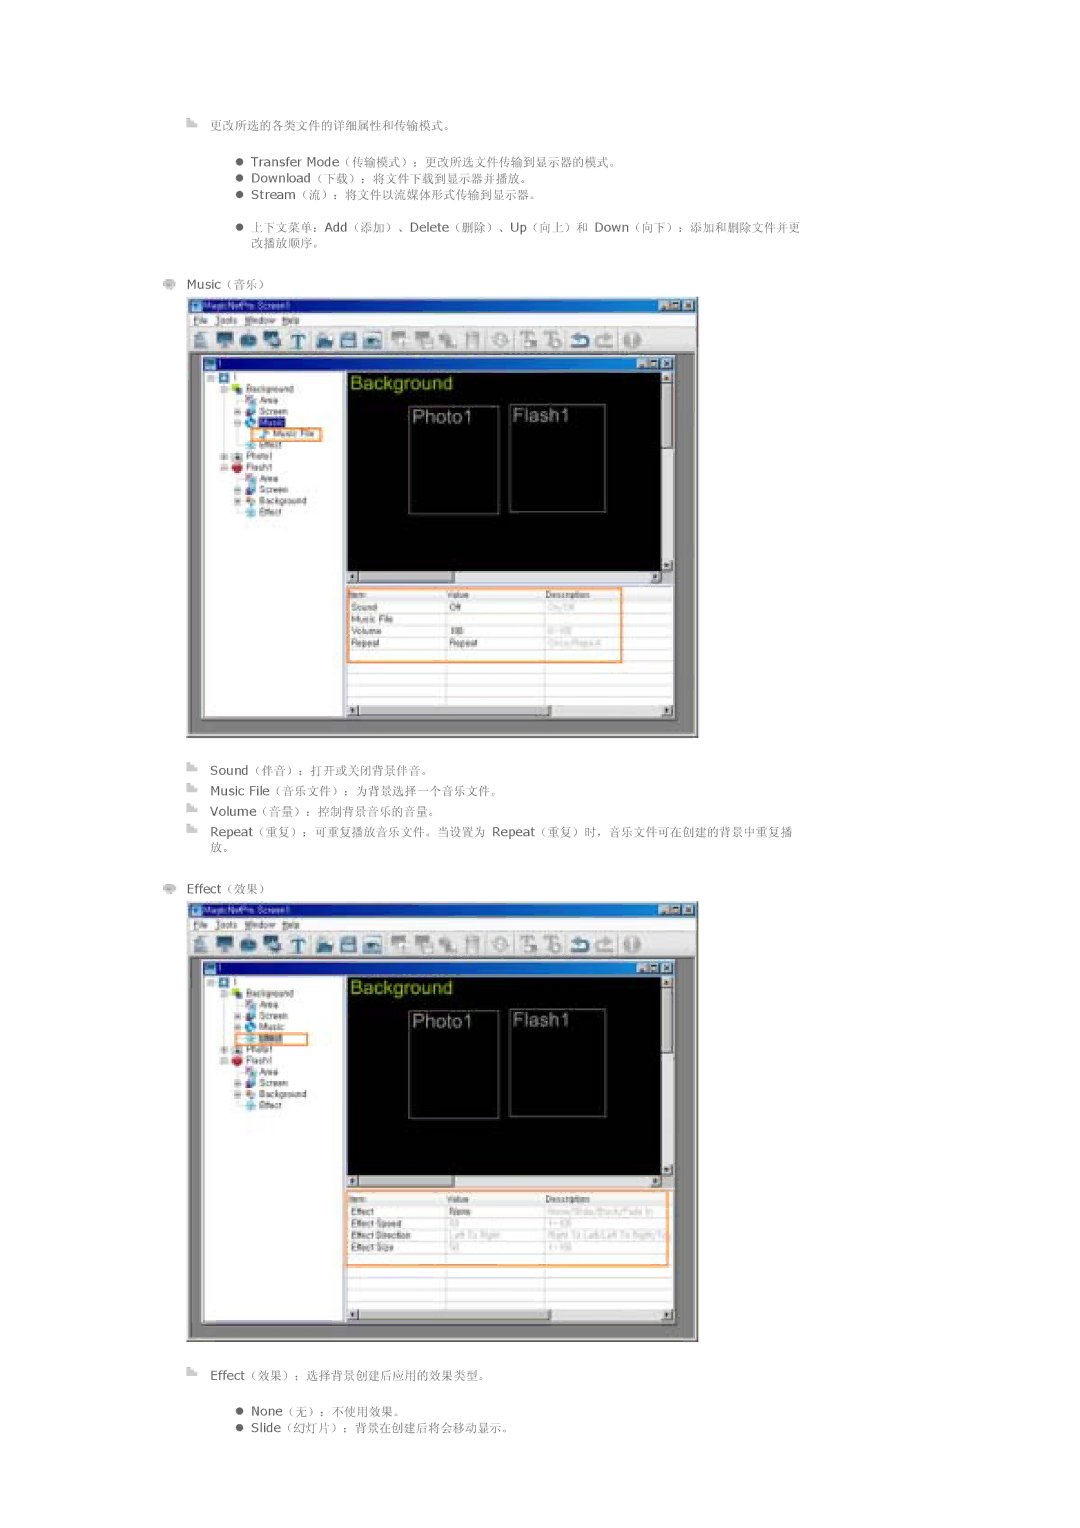 Samsung LS57BPTNB/EDC, LS57BPTNS/EDC manual Transfer Mode Download Stream Add Delete 